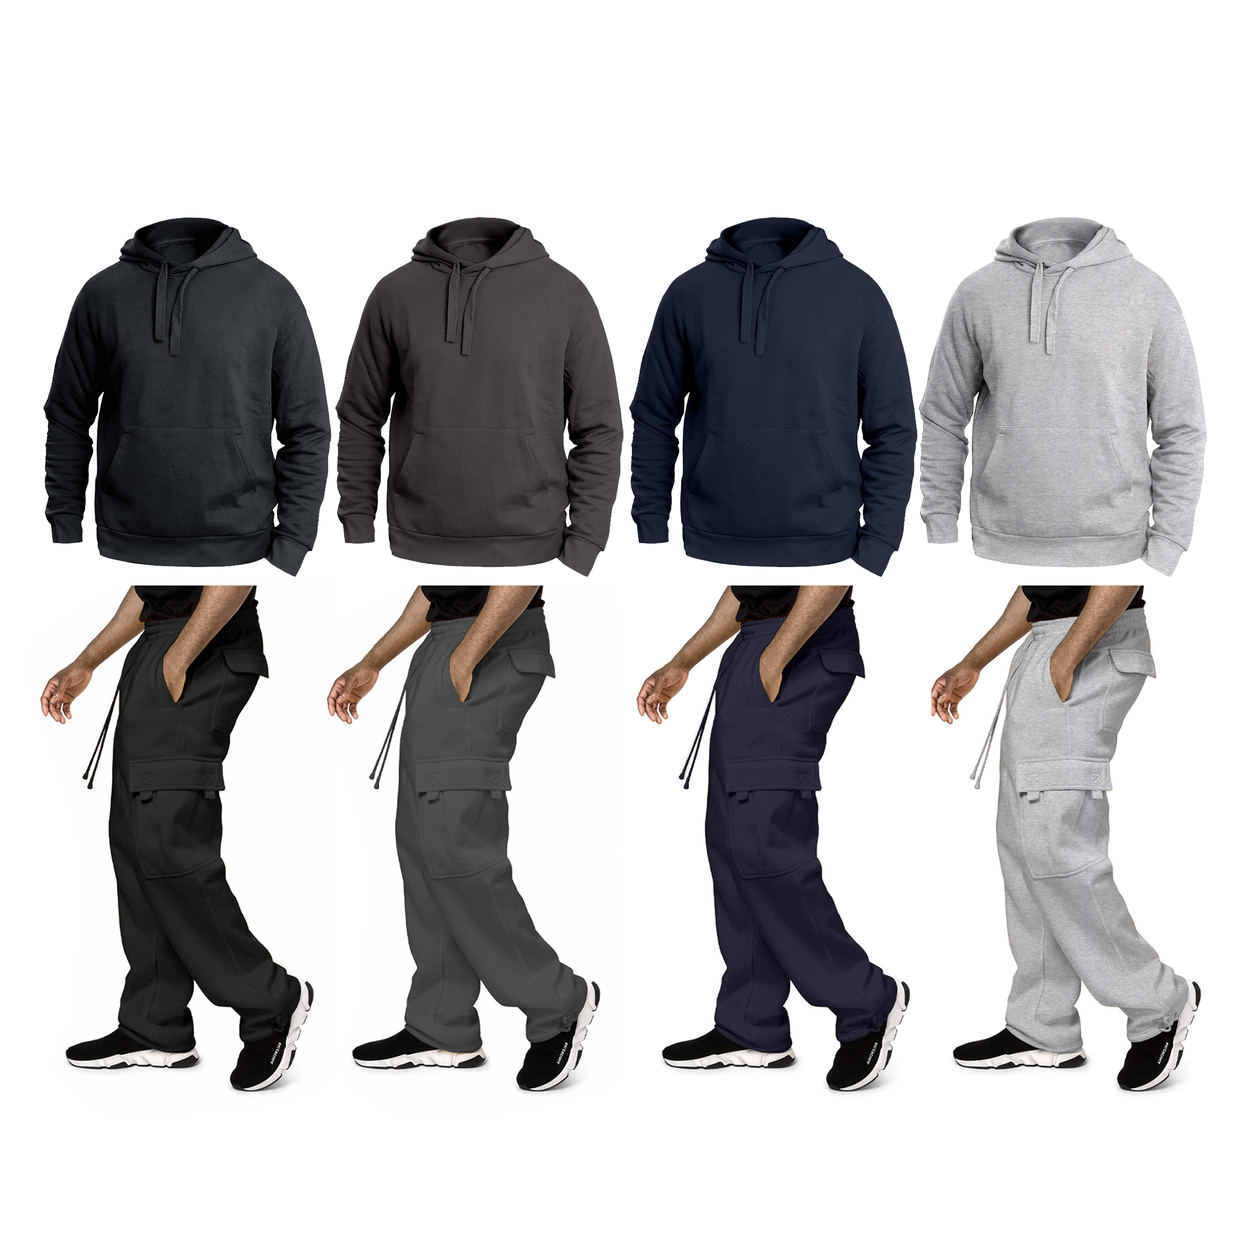 2-Pack: Men's Big & Tall Winter Warm Cozy Athletic Fleece Lined Multi-Pocket Cargo Sweatsuit - Navy, X-large